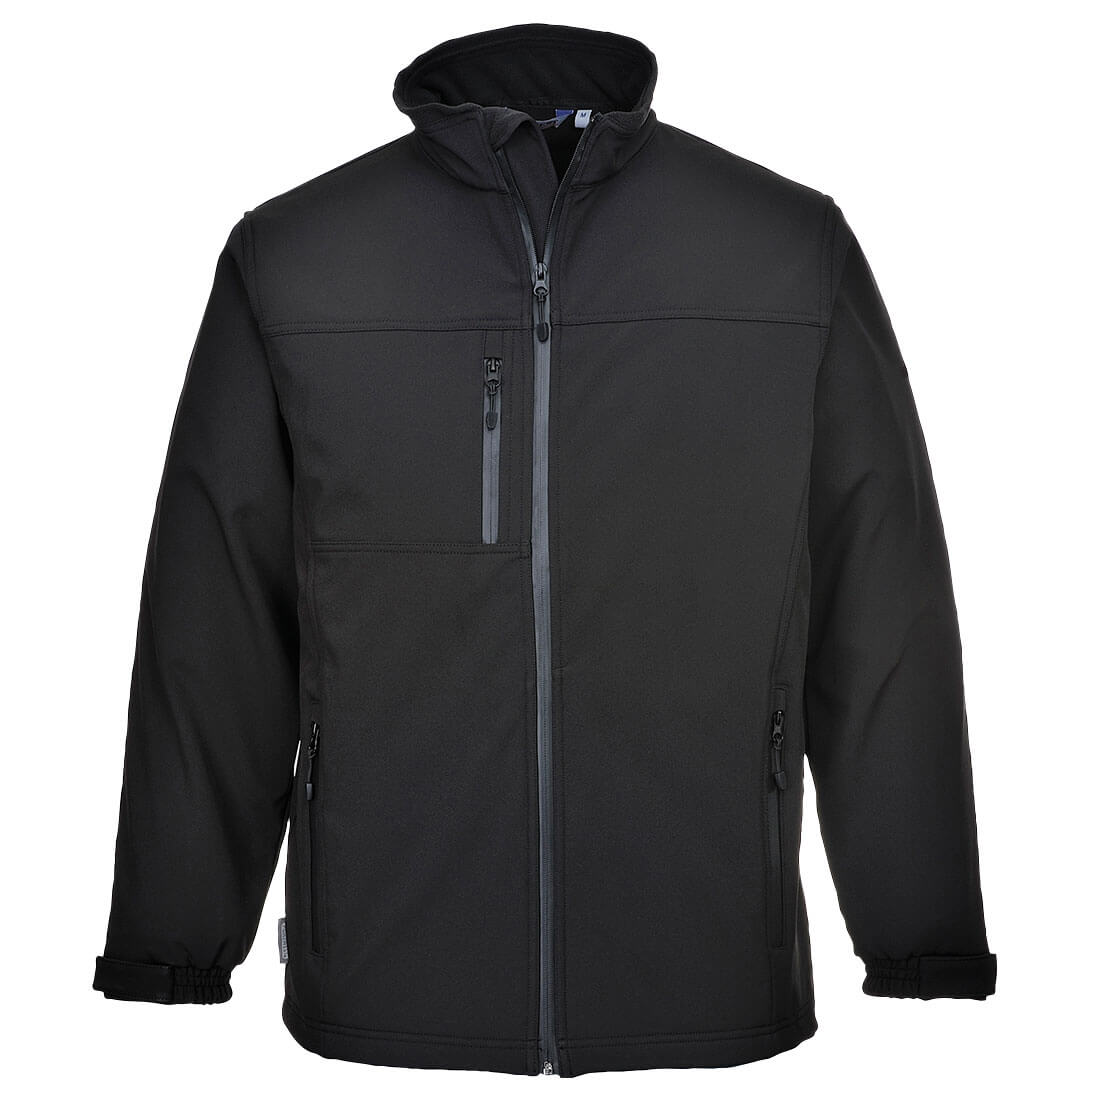 Portwest TK50 Black Sz 5XL Softshell Jacket Microfleece Coat Waterproof Breathable Work